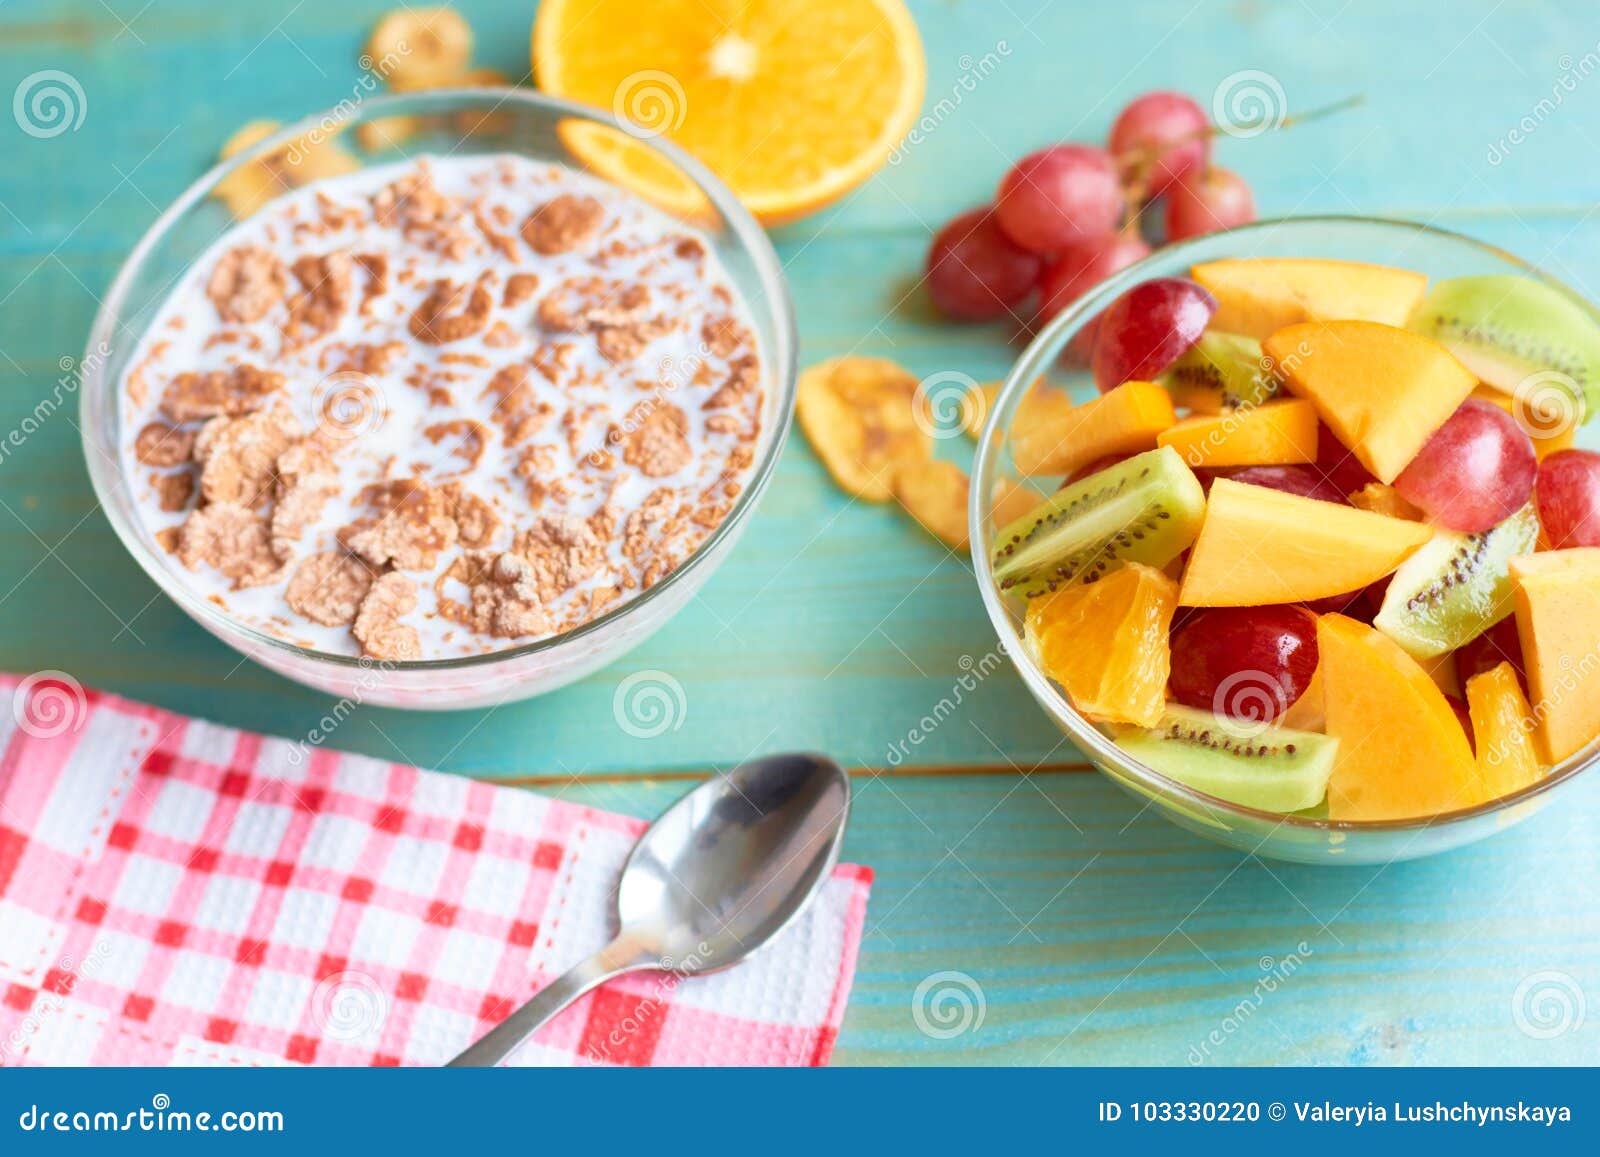 useful breakfast from porridge and fruit